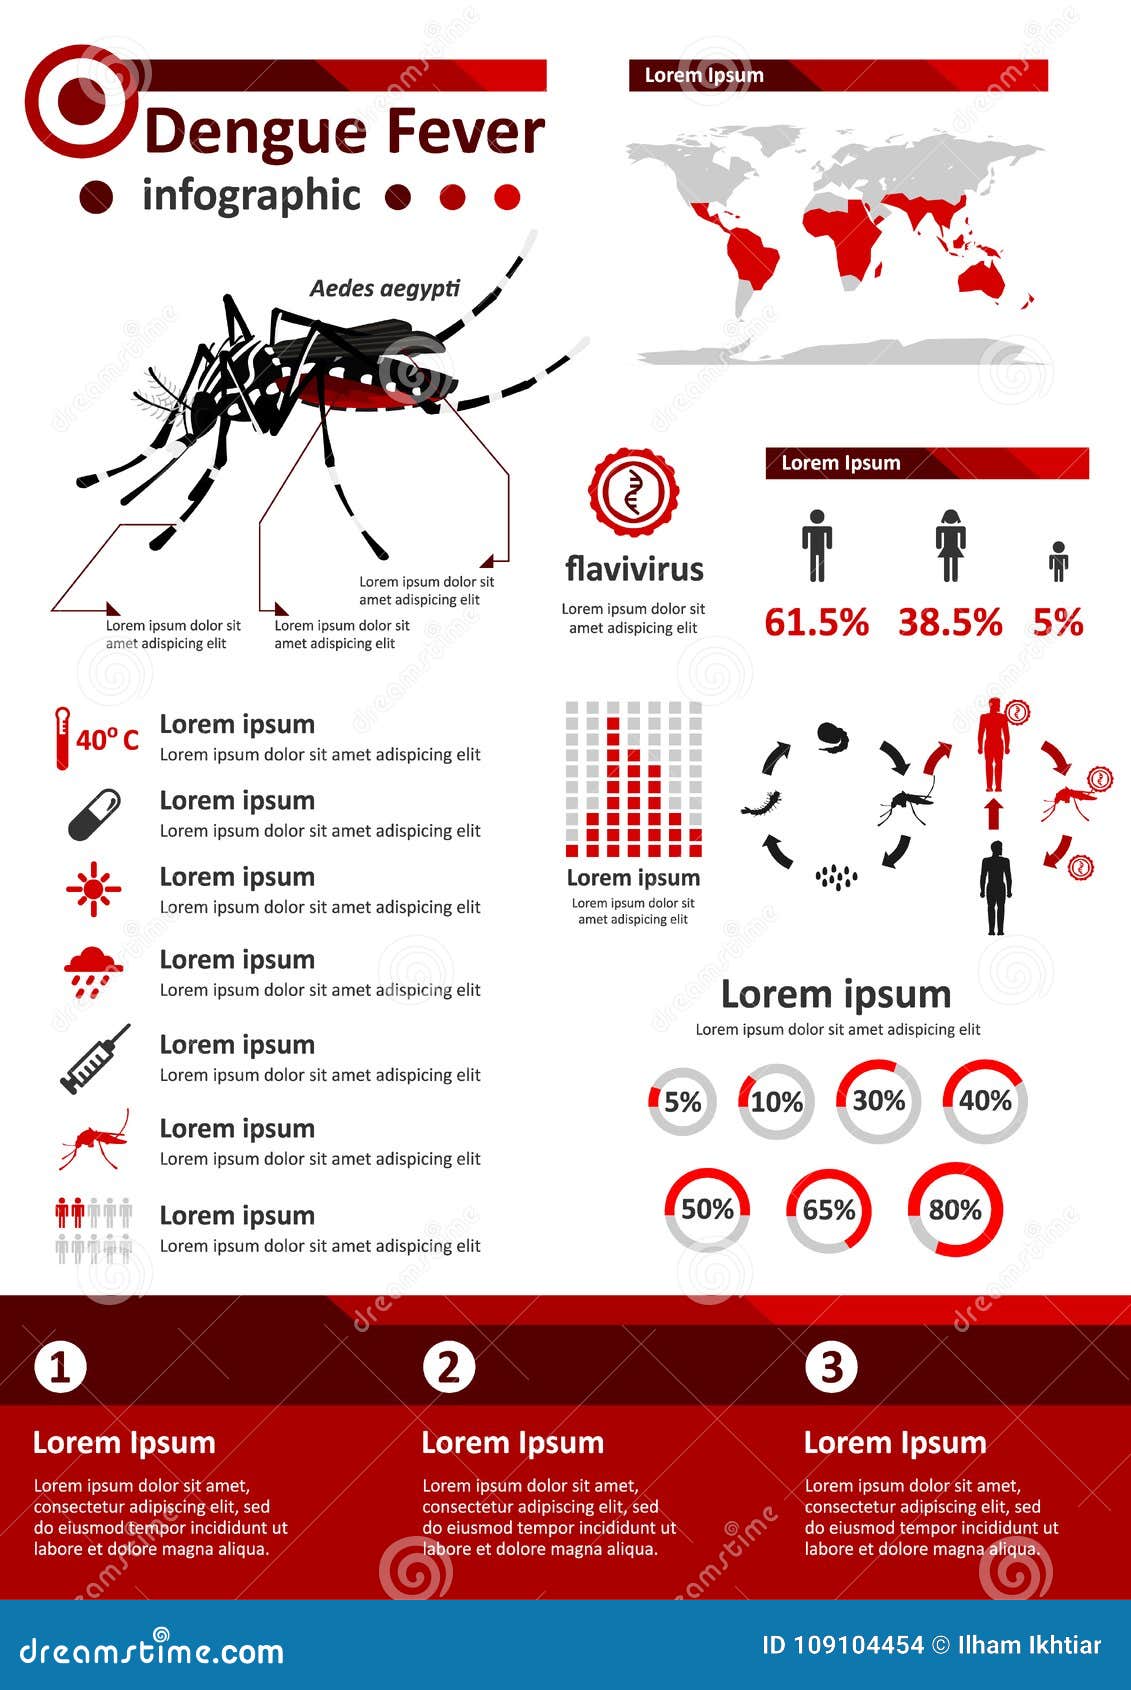 infectious disease infographics - dengue fever